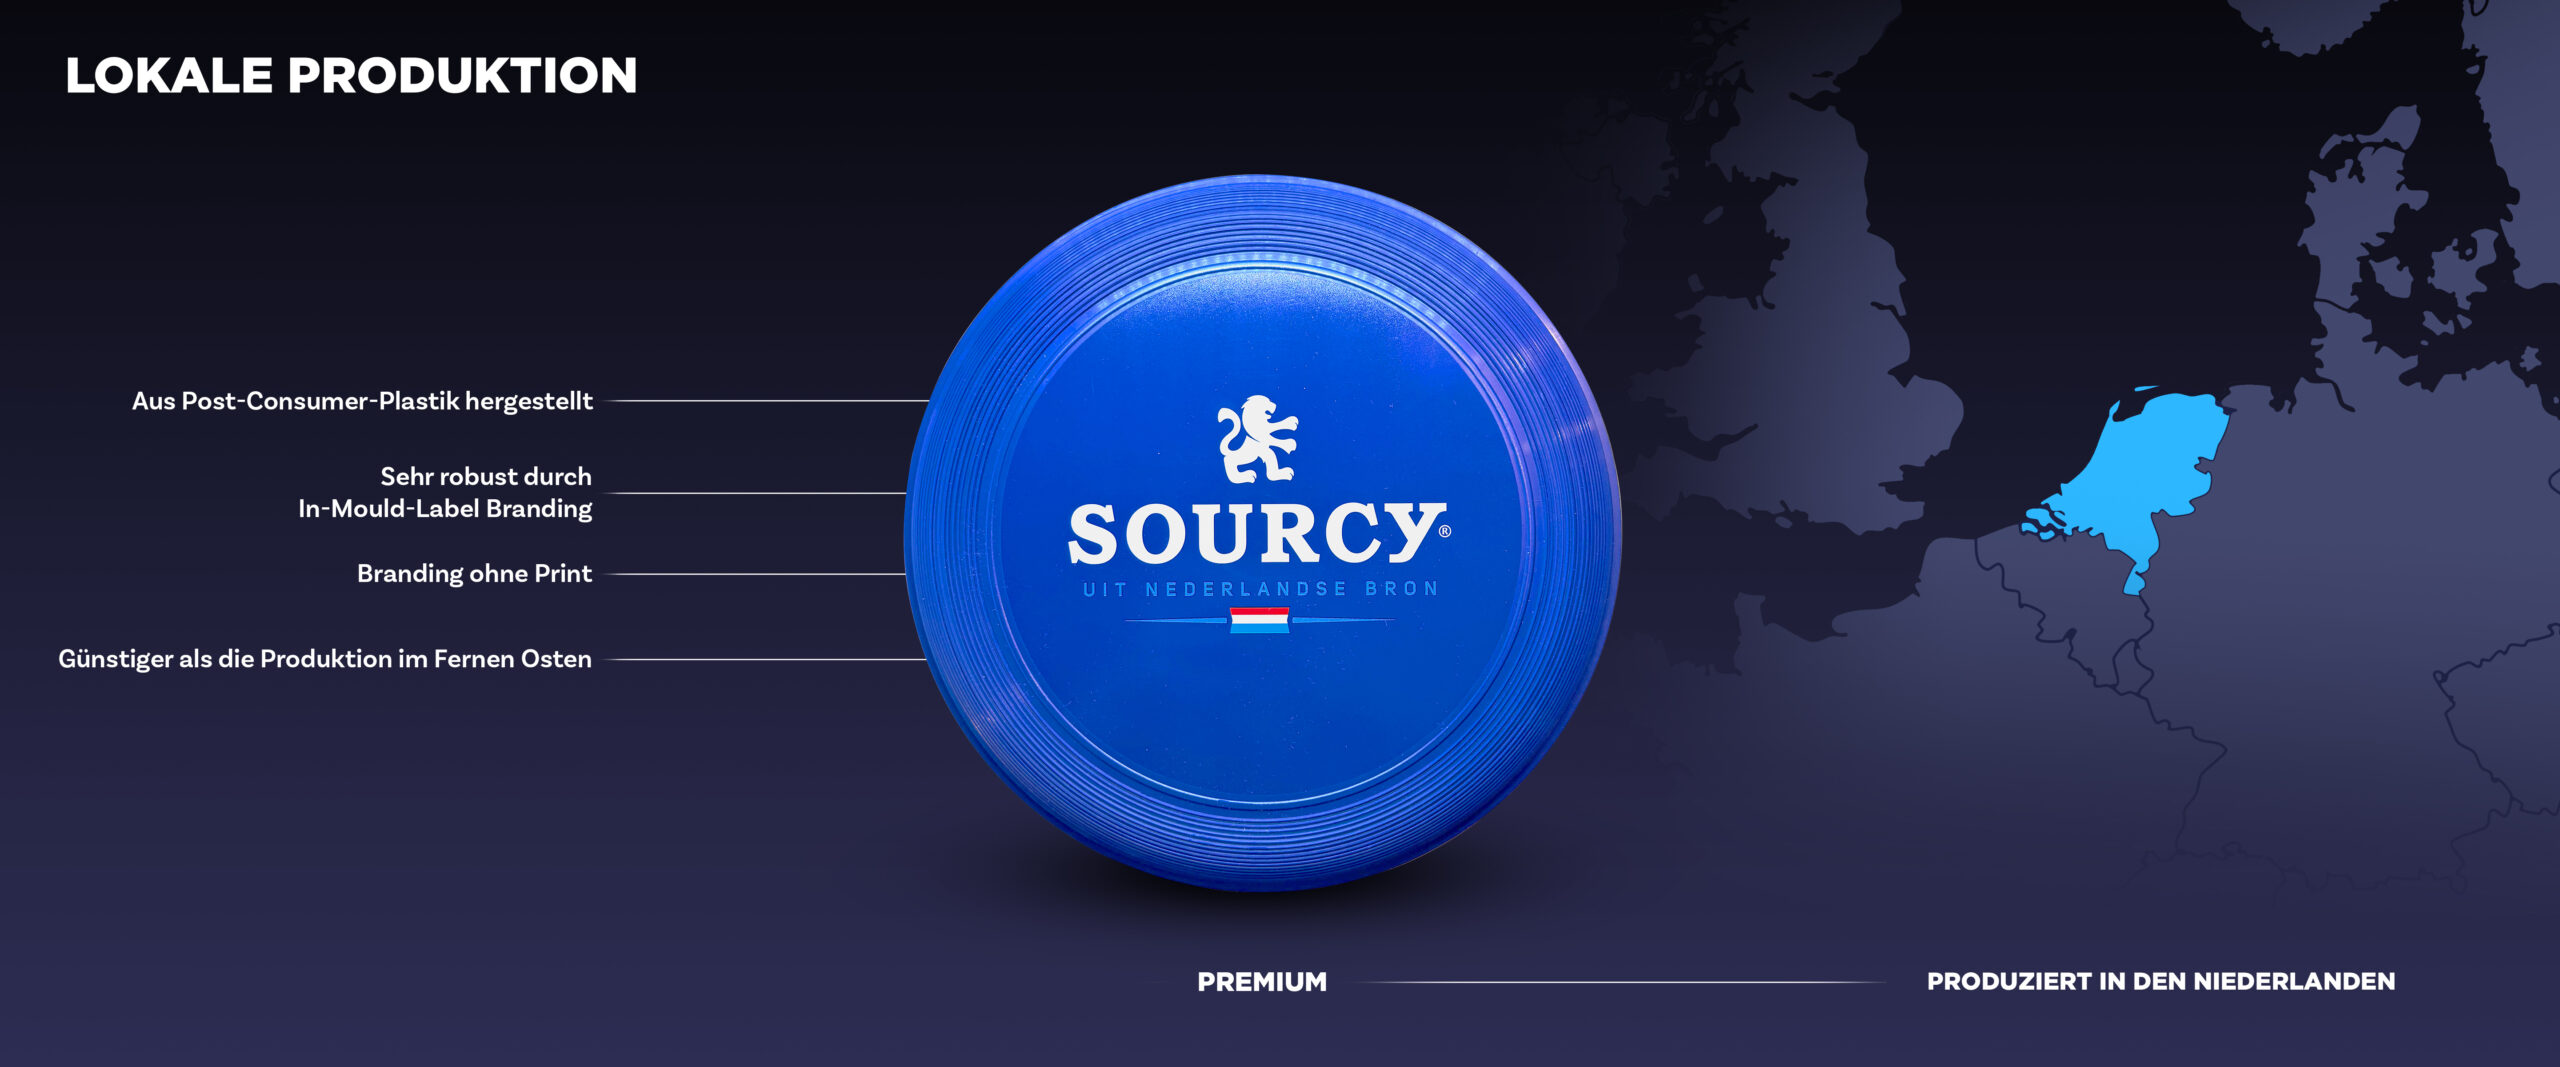 240305_Sustainability_Sourcy_Frisbee